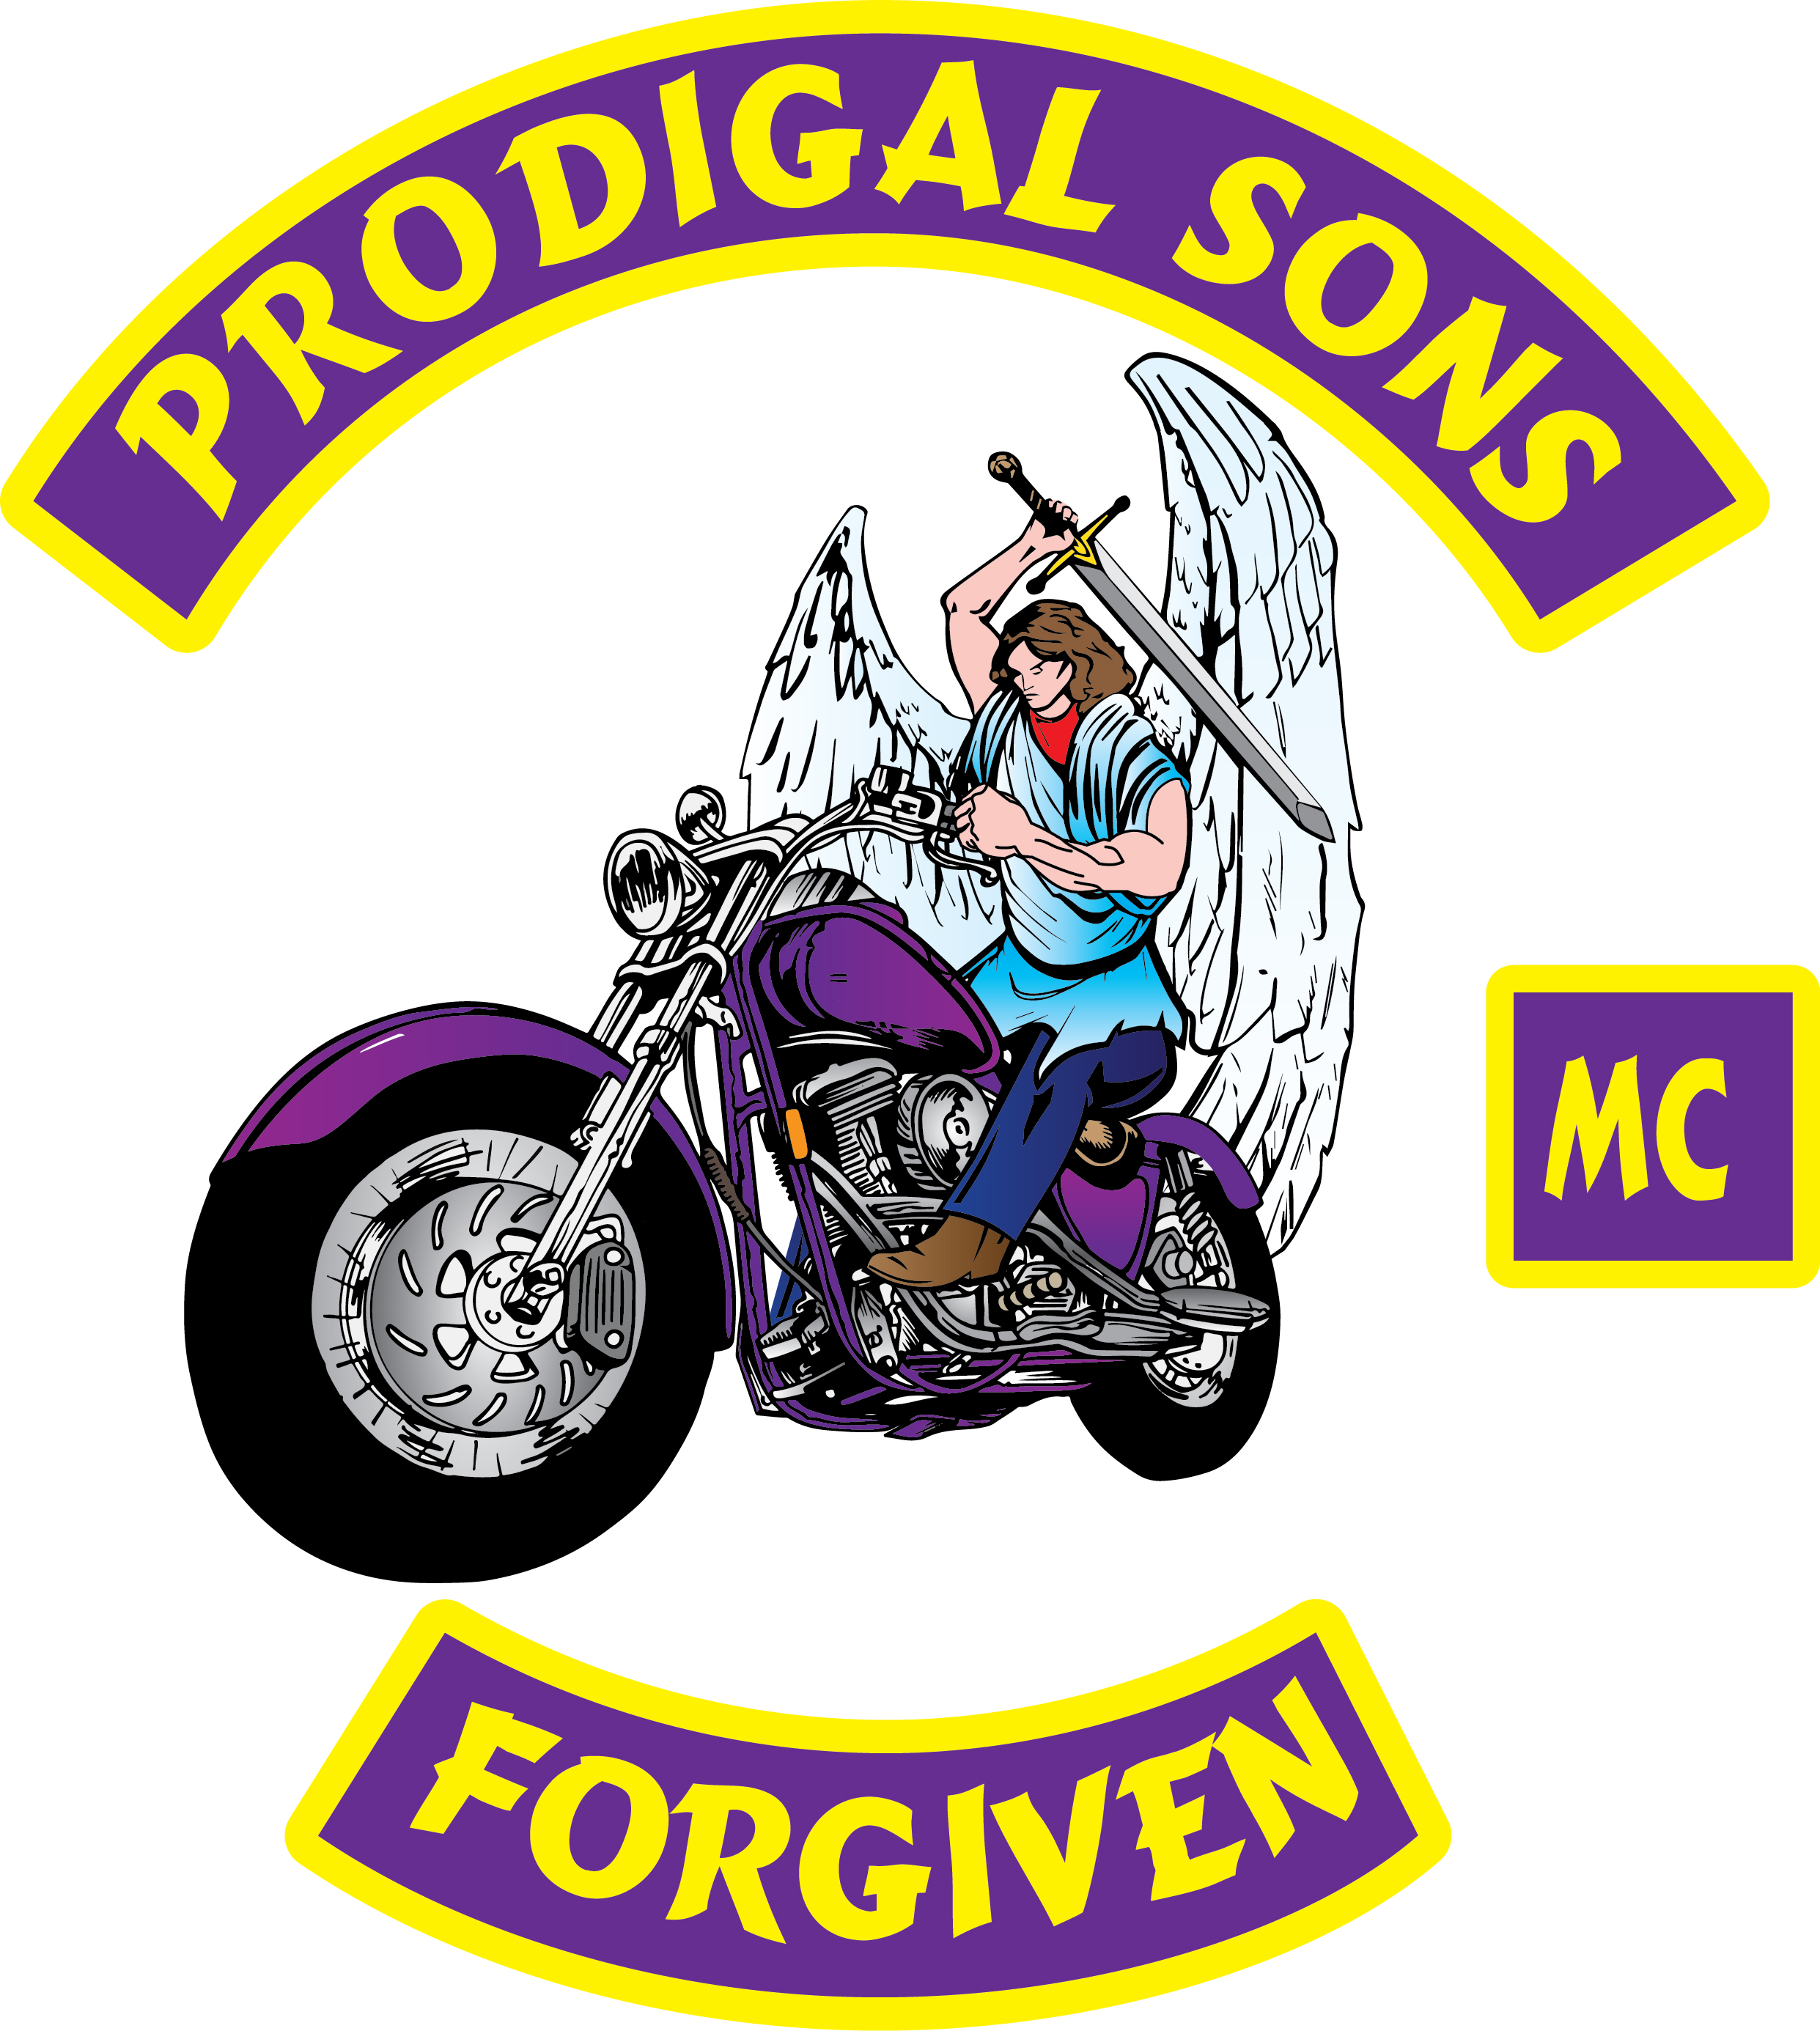 Prodigal Sons MC